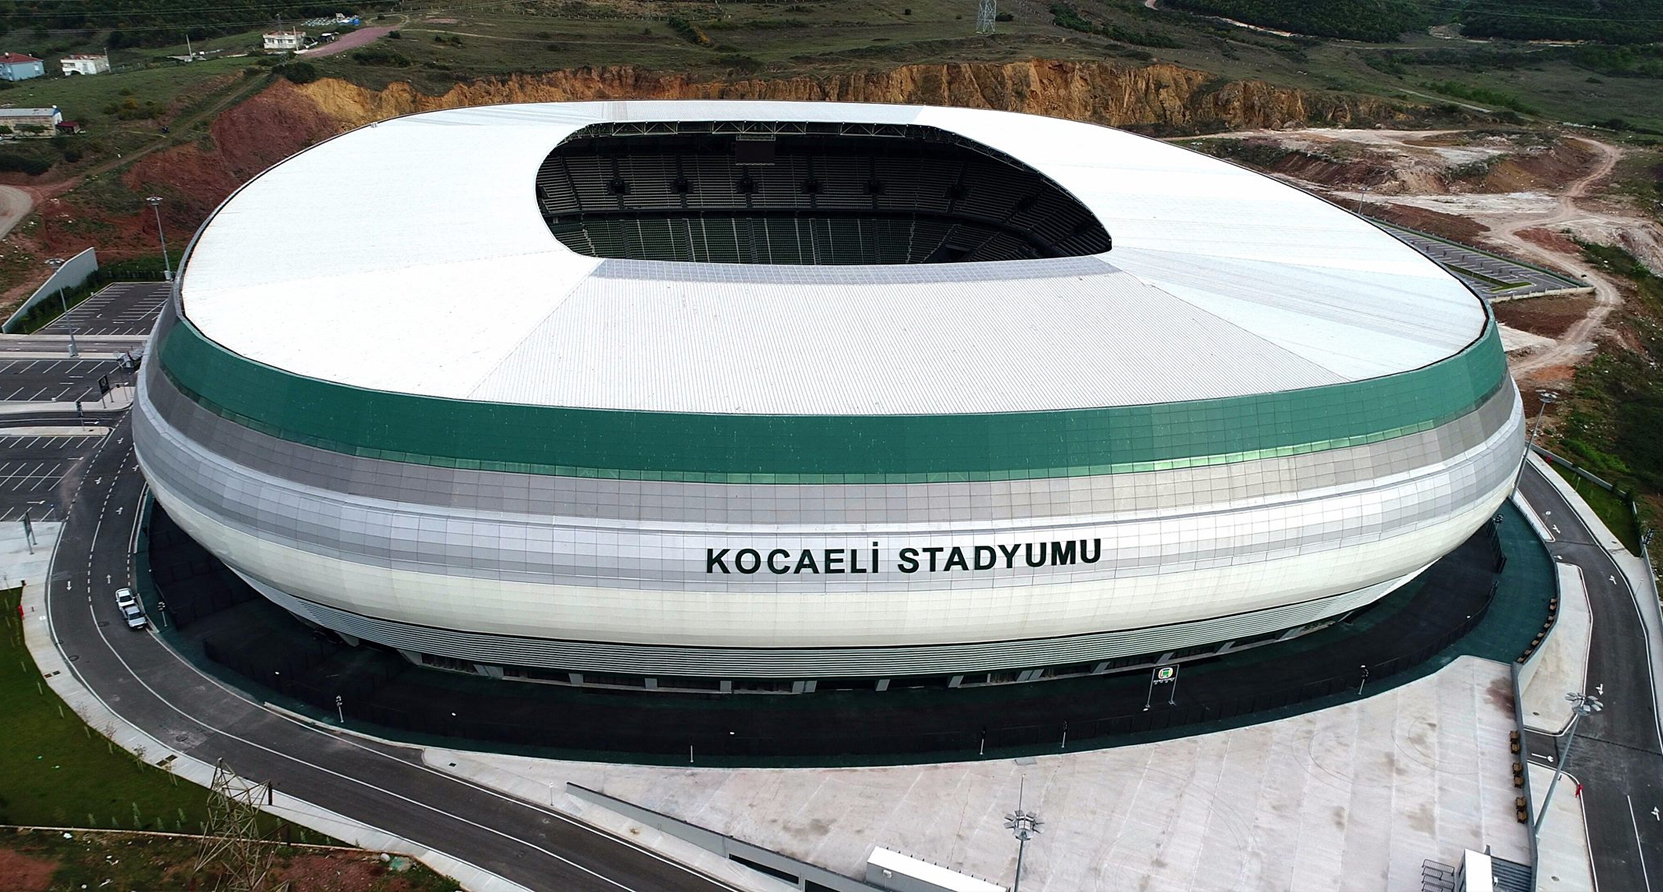 Kocaeli Stadium